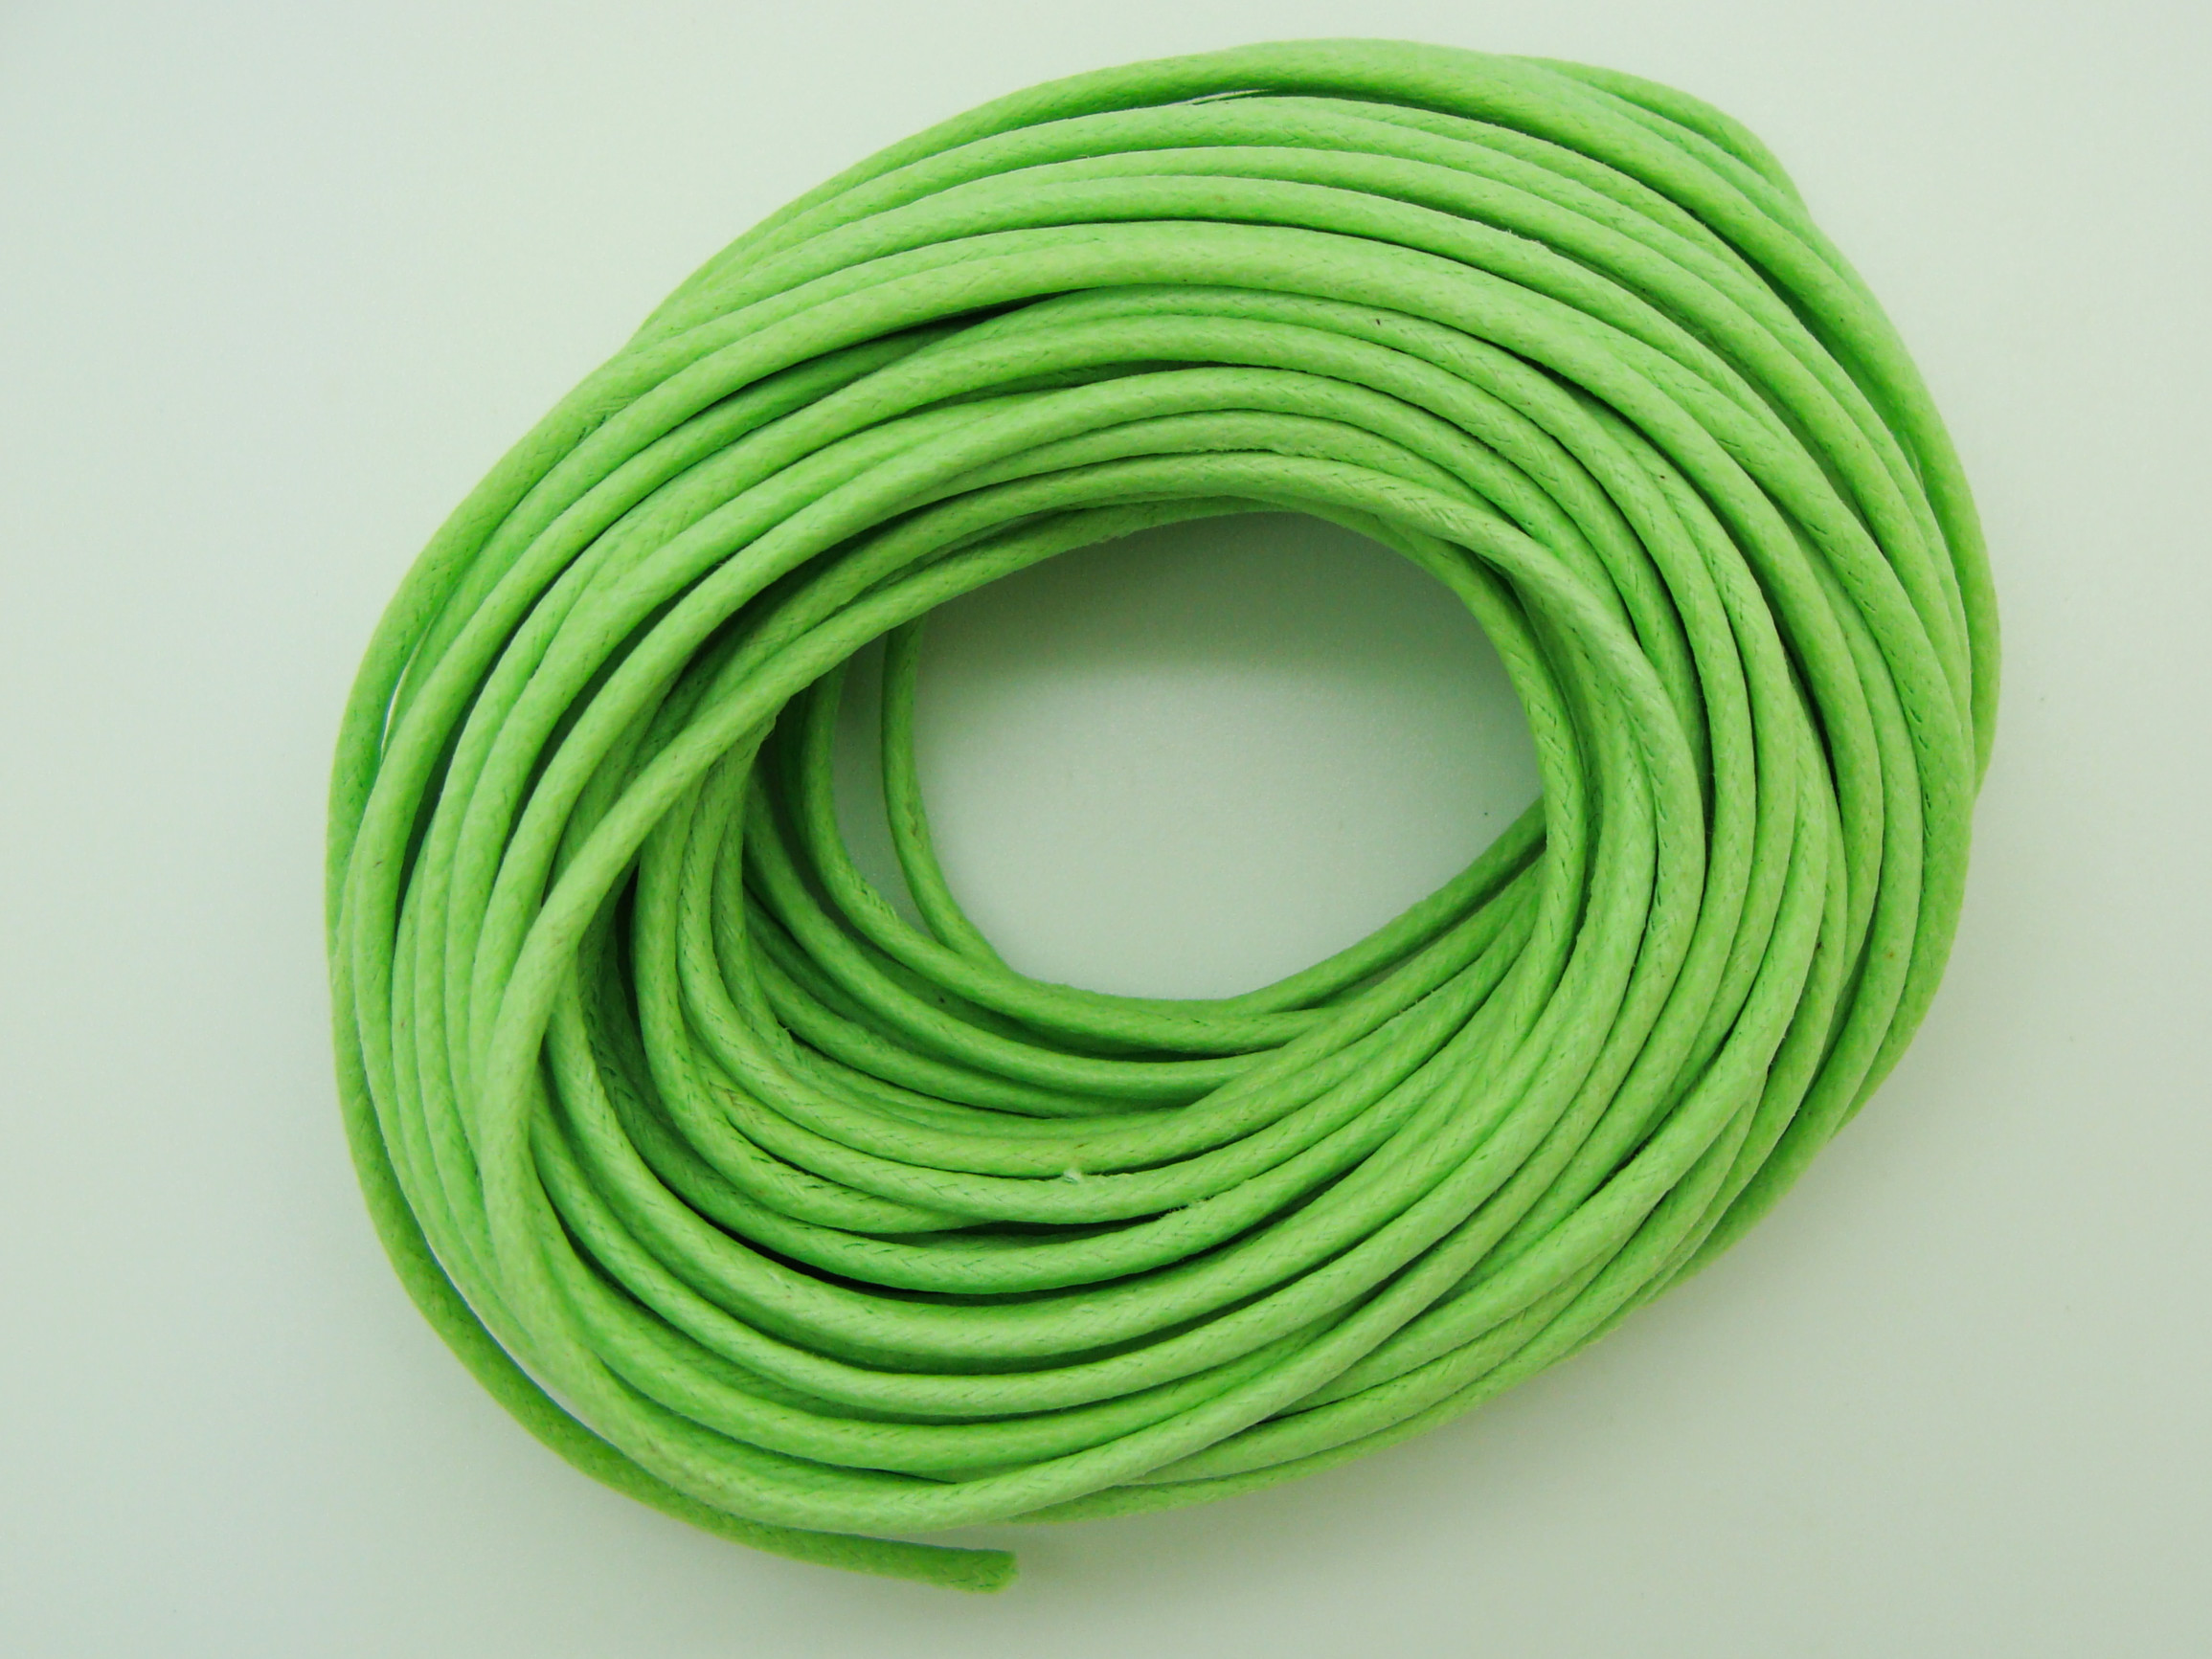 fil coton cire 2mm vert clair p1